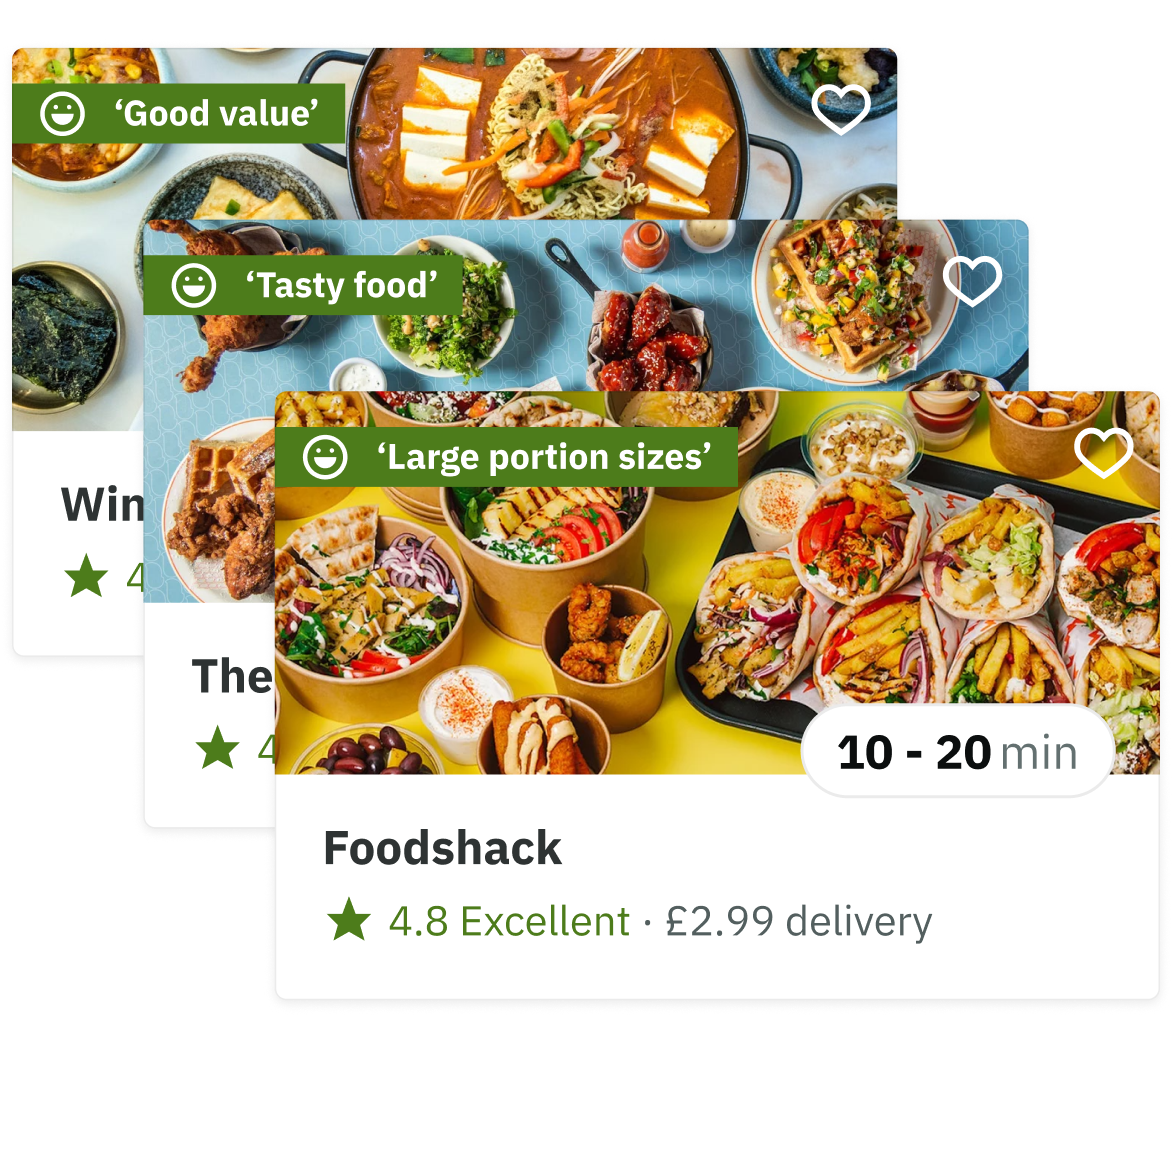 Restaurants on the Deliveroo app